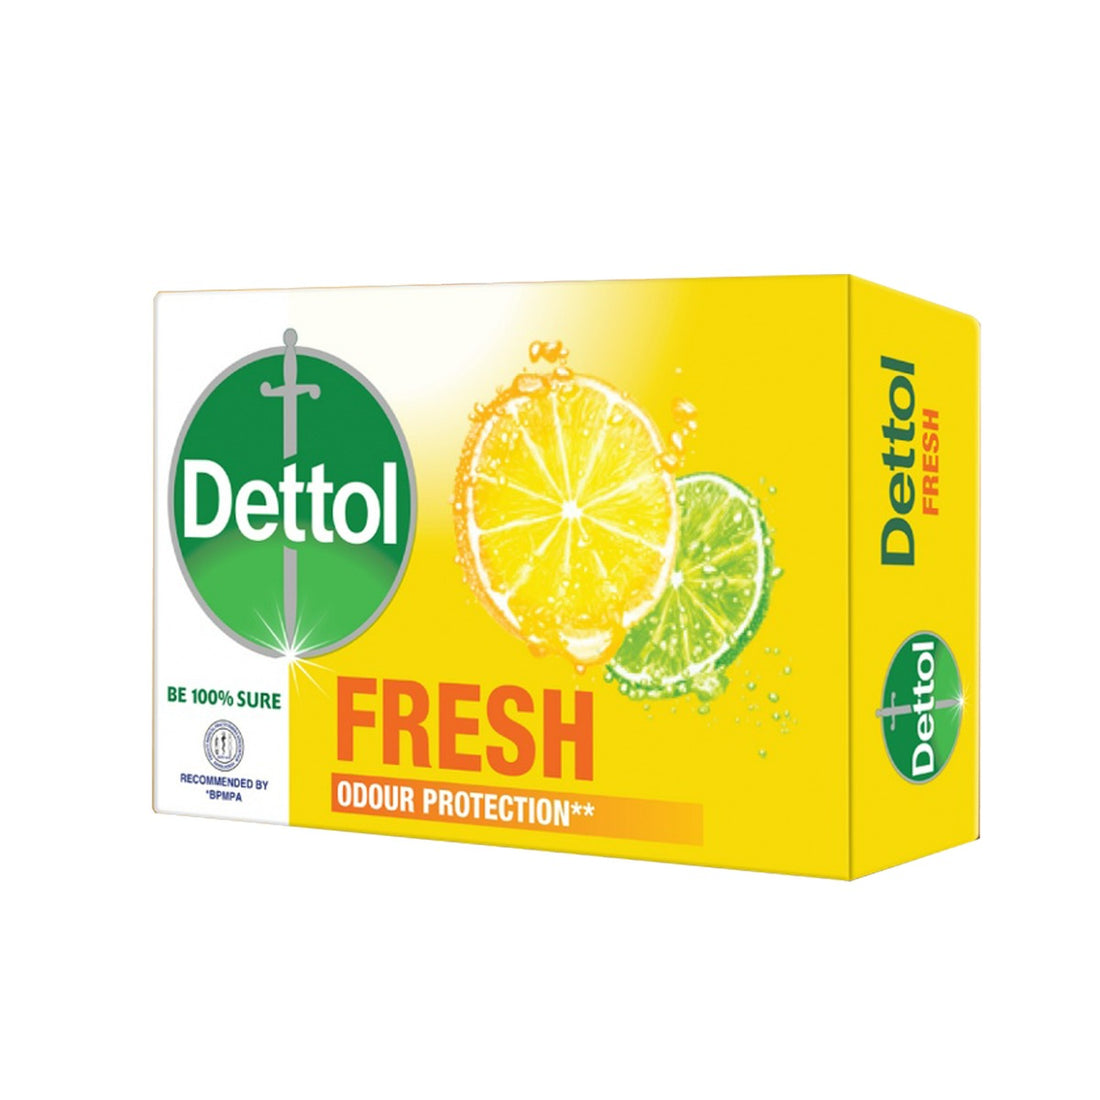 Dettol Citrus Fresh Bathing Bar Soap With Odour Protection